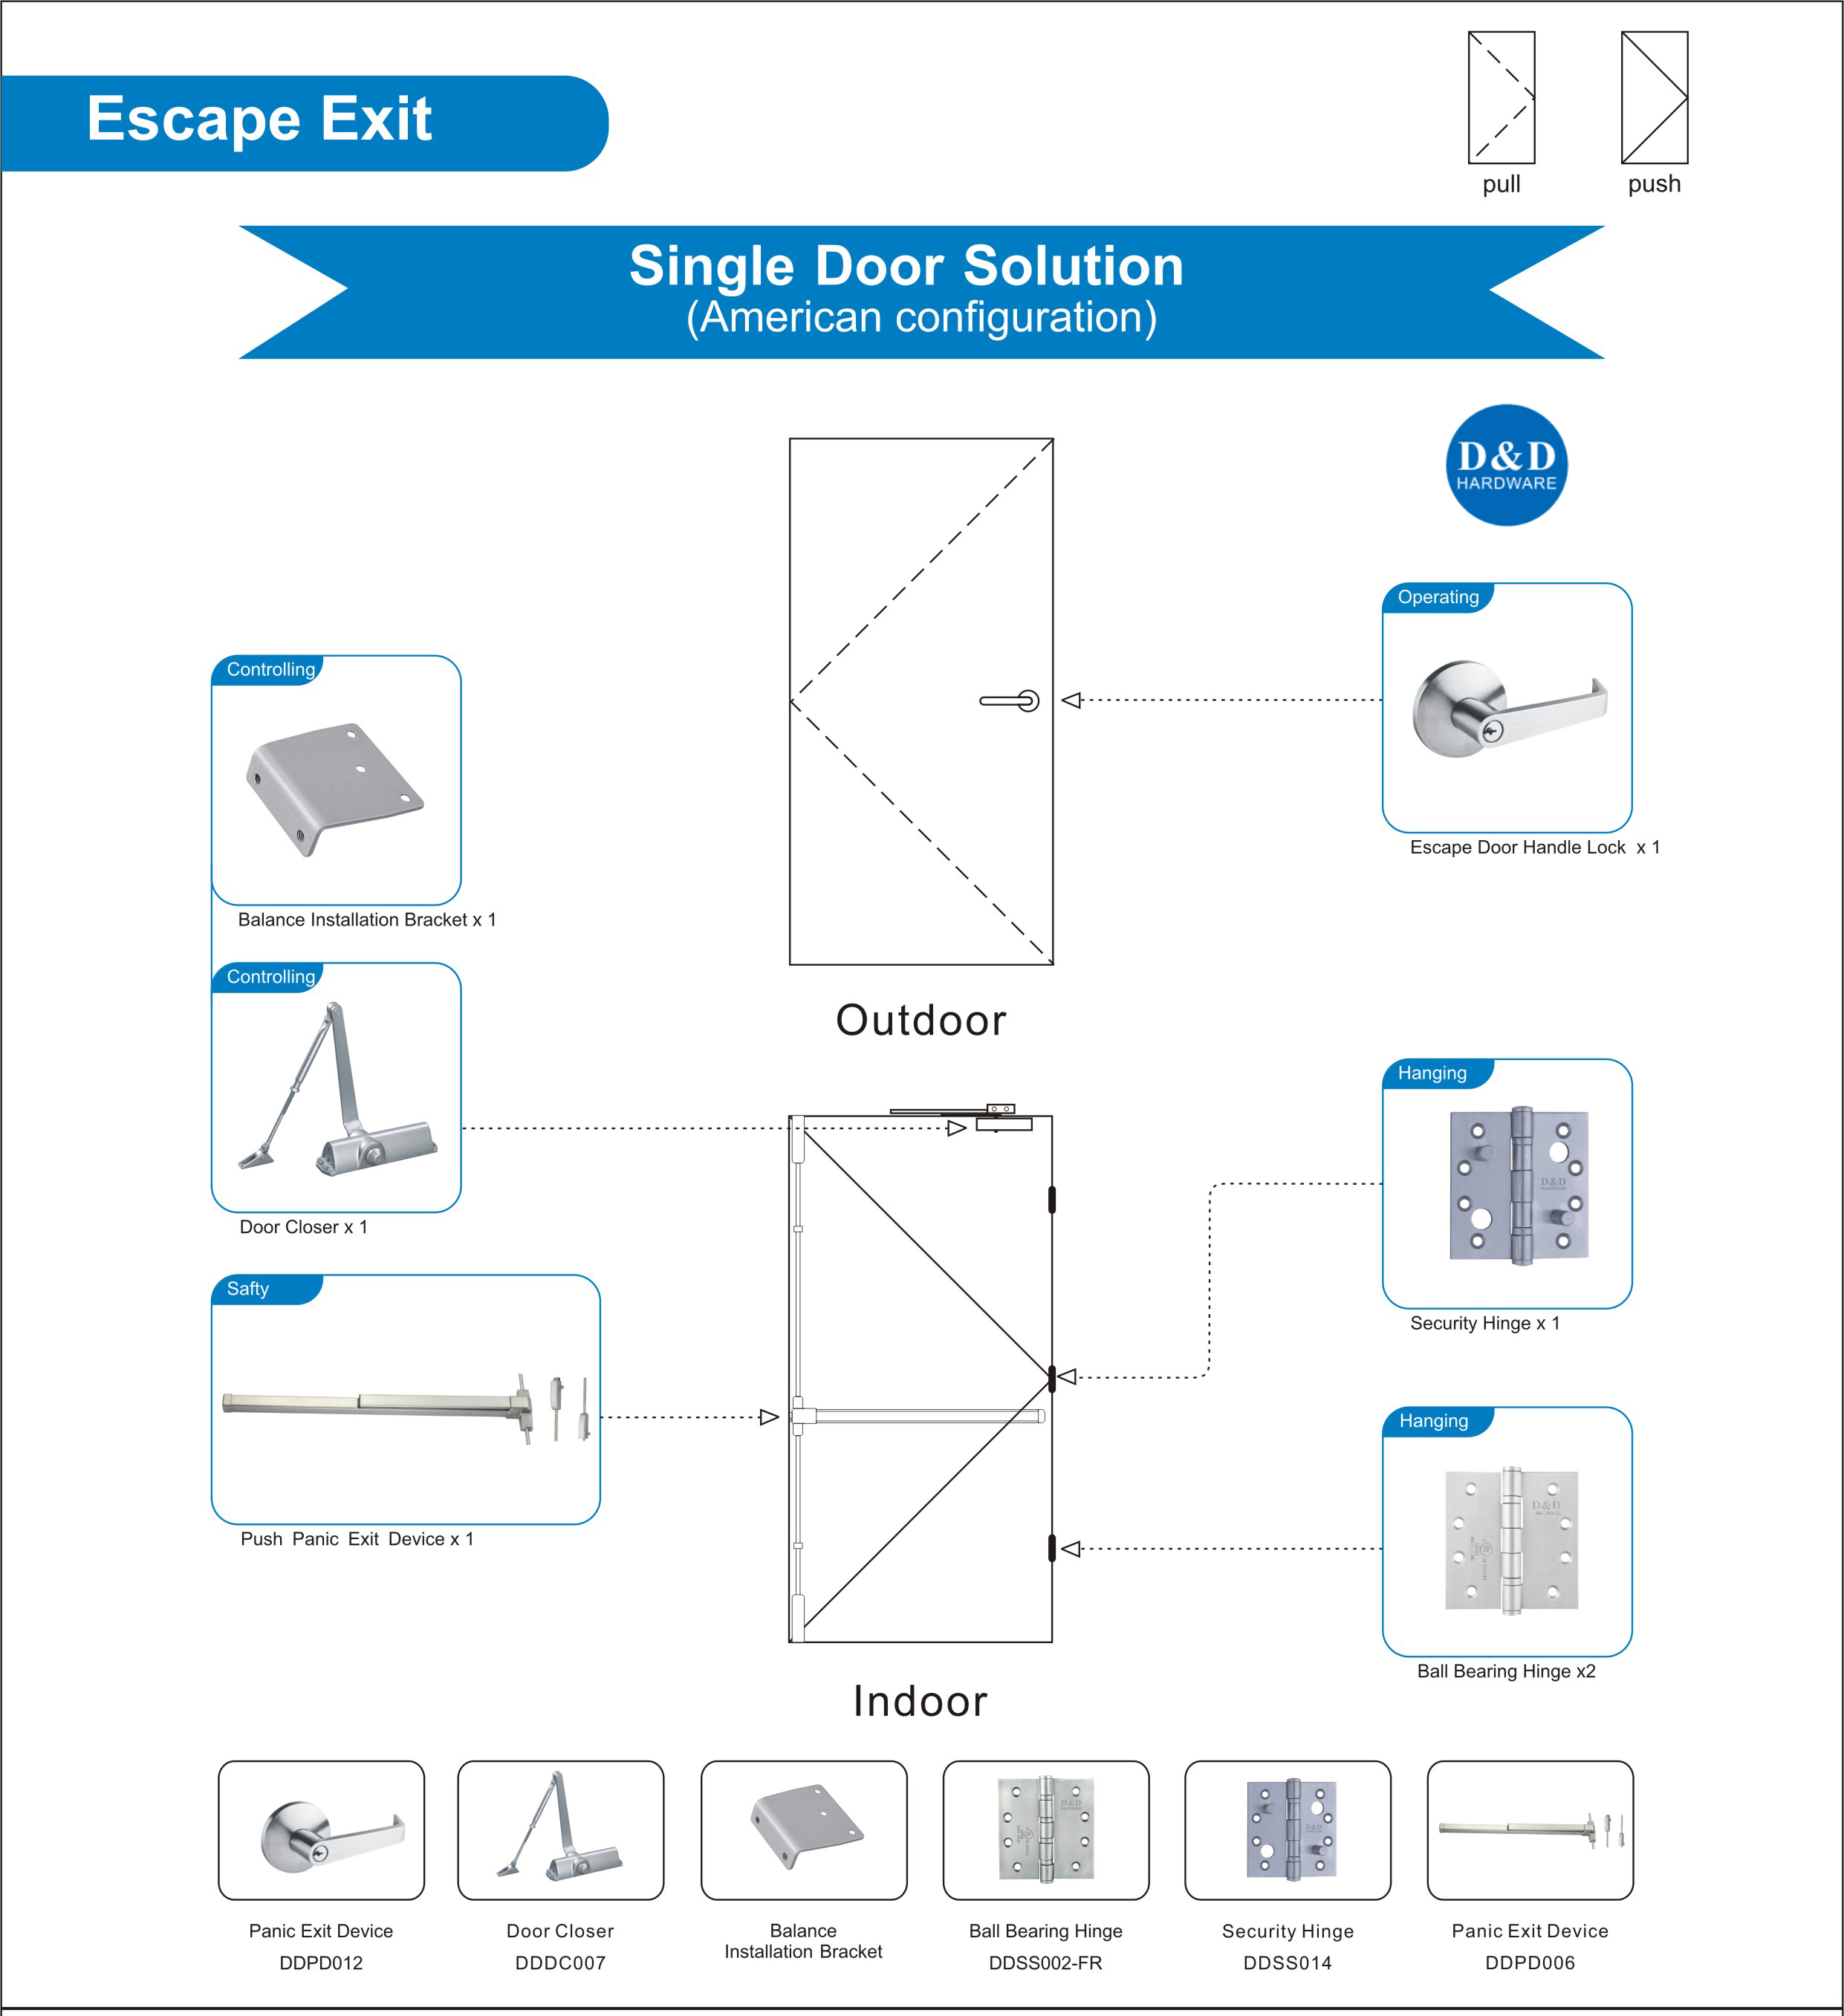 Building Hardware Solution for Escape Exit Single Door